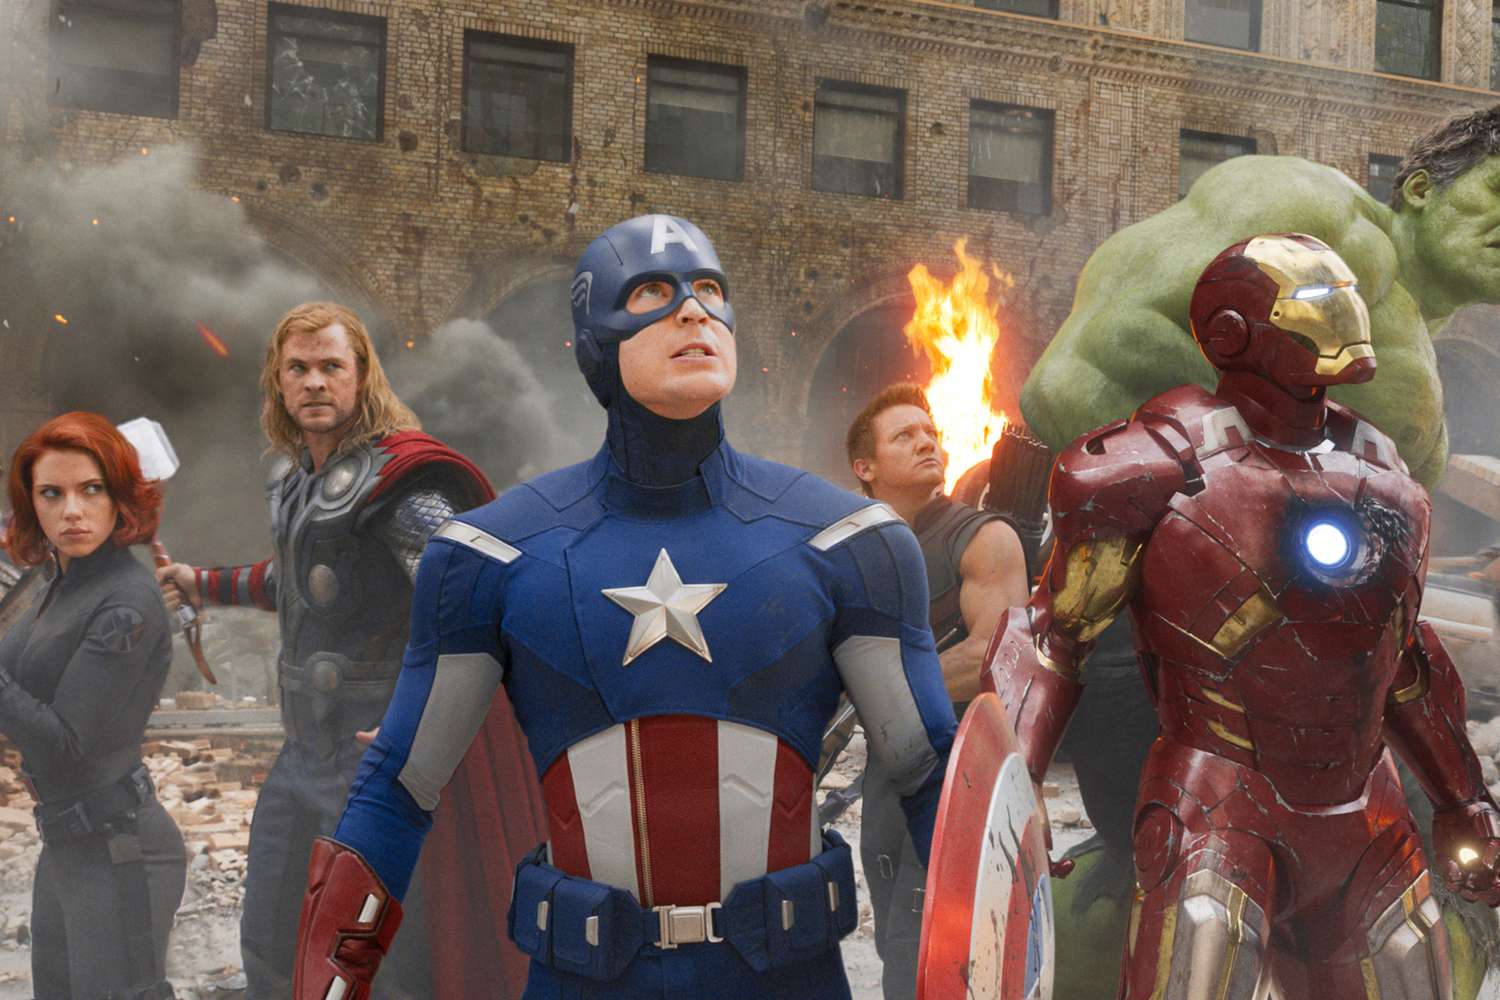 'The Avengers' cast reunited to dub movie in the Lakota language